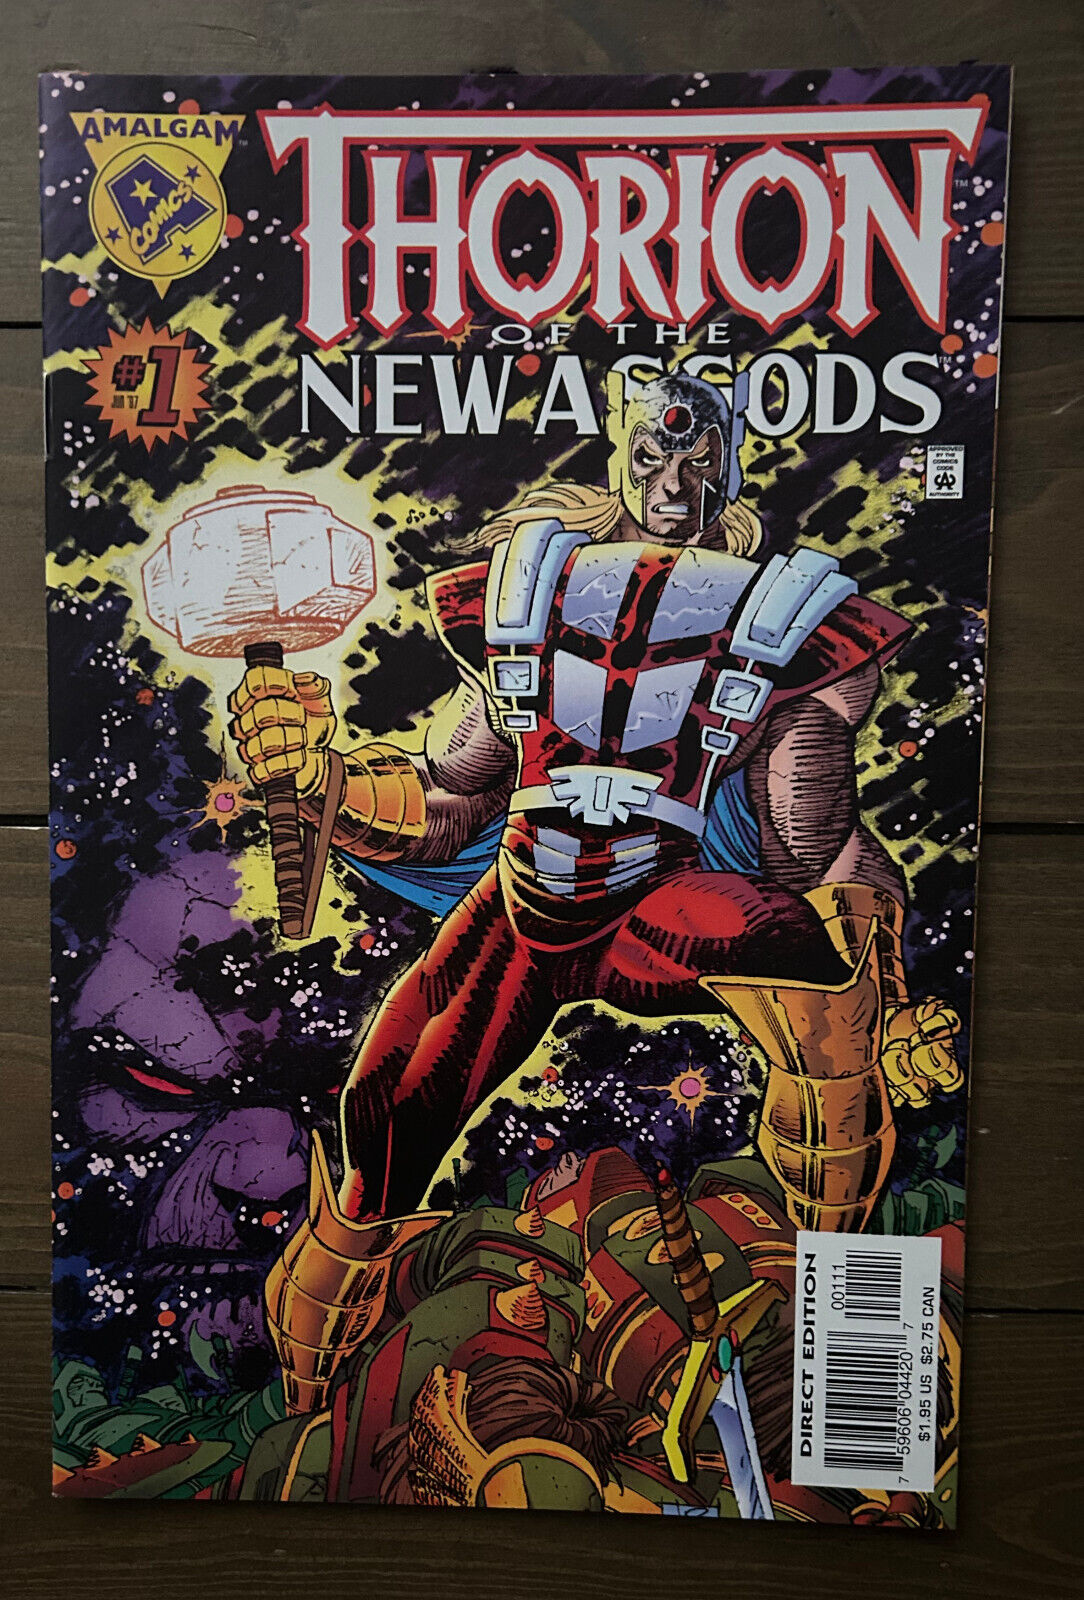 Thorion of the New Asgods #1 (Marvel, June 1997)